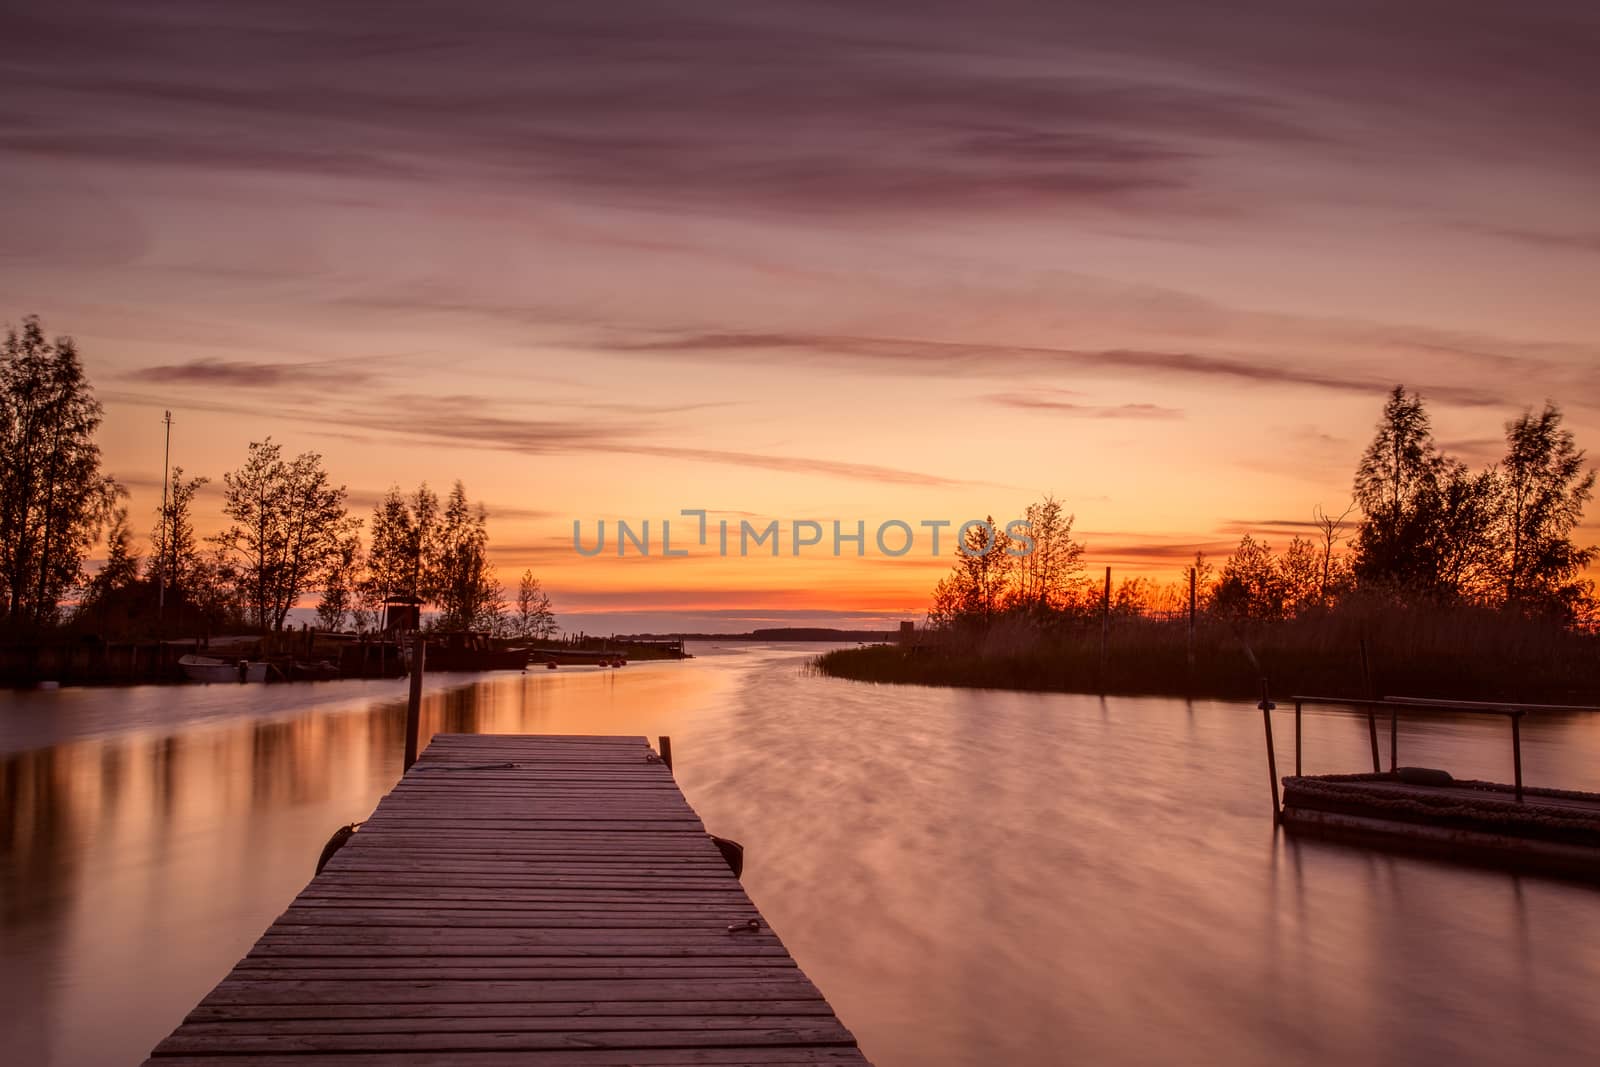 Sunset in Pori, Finland by leorantala